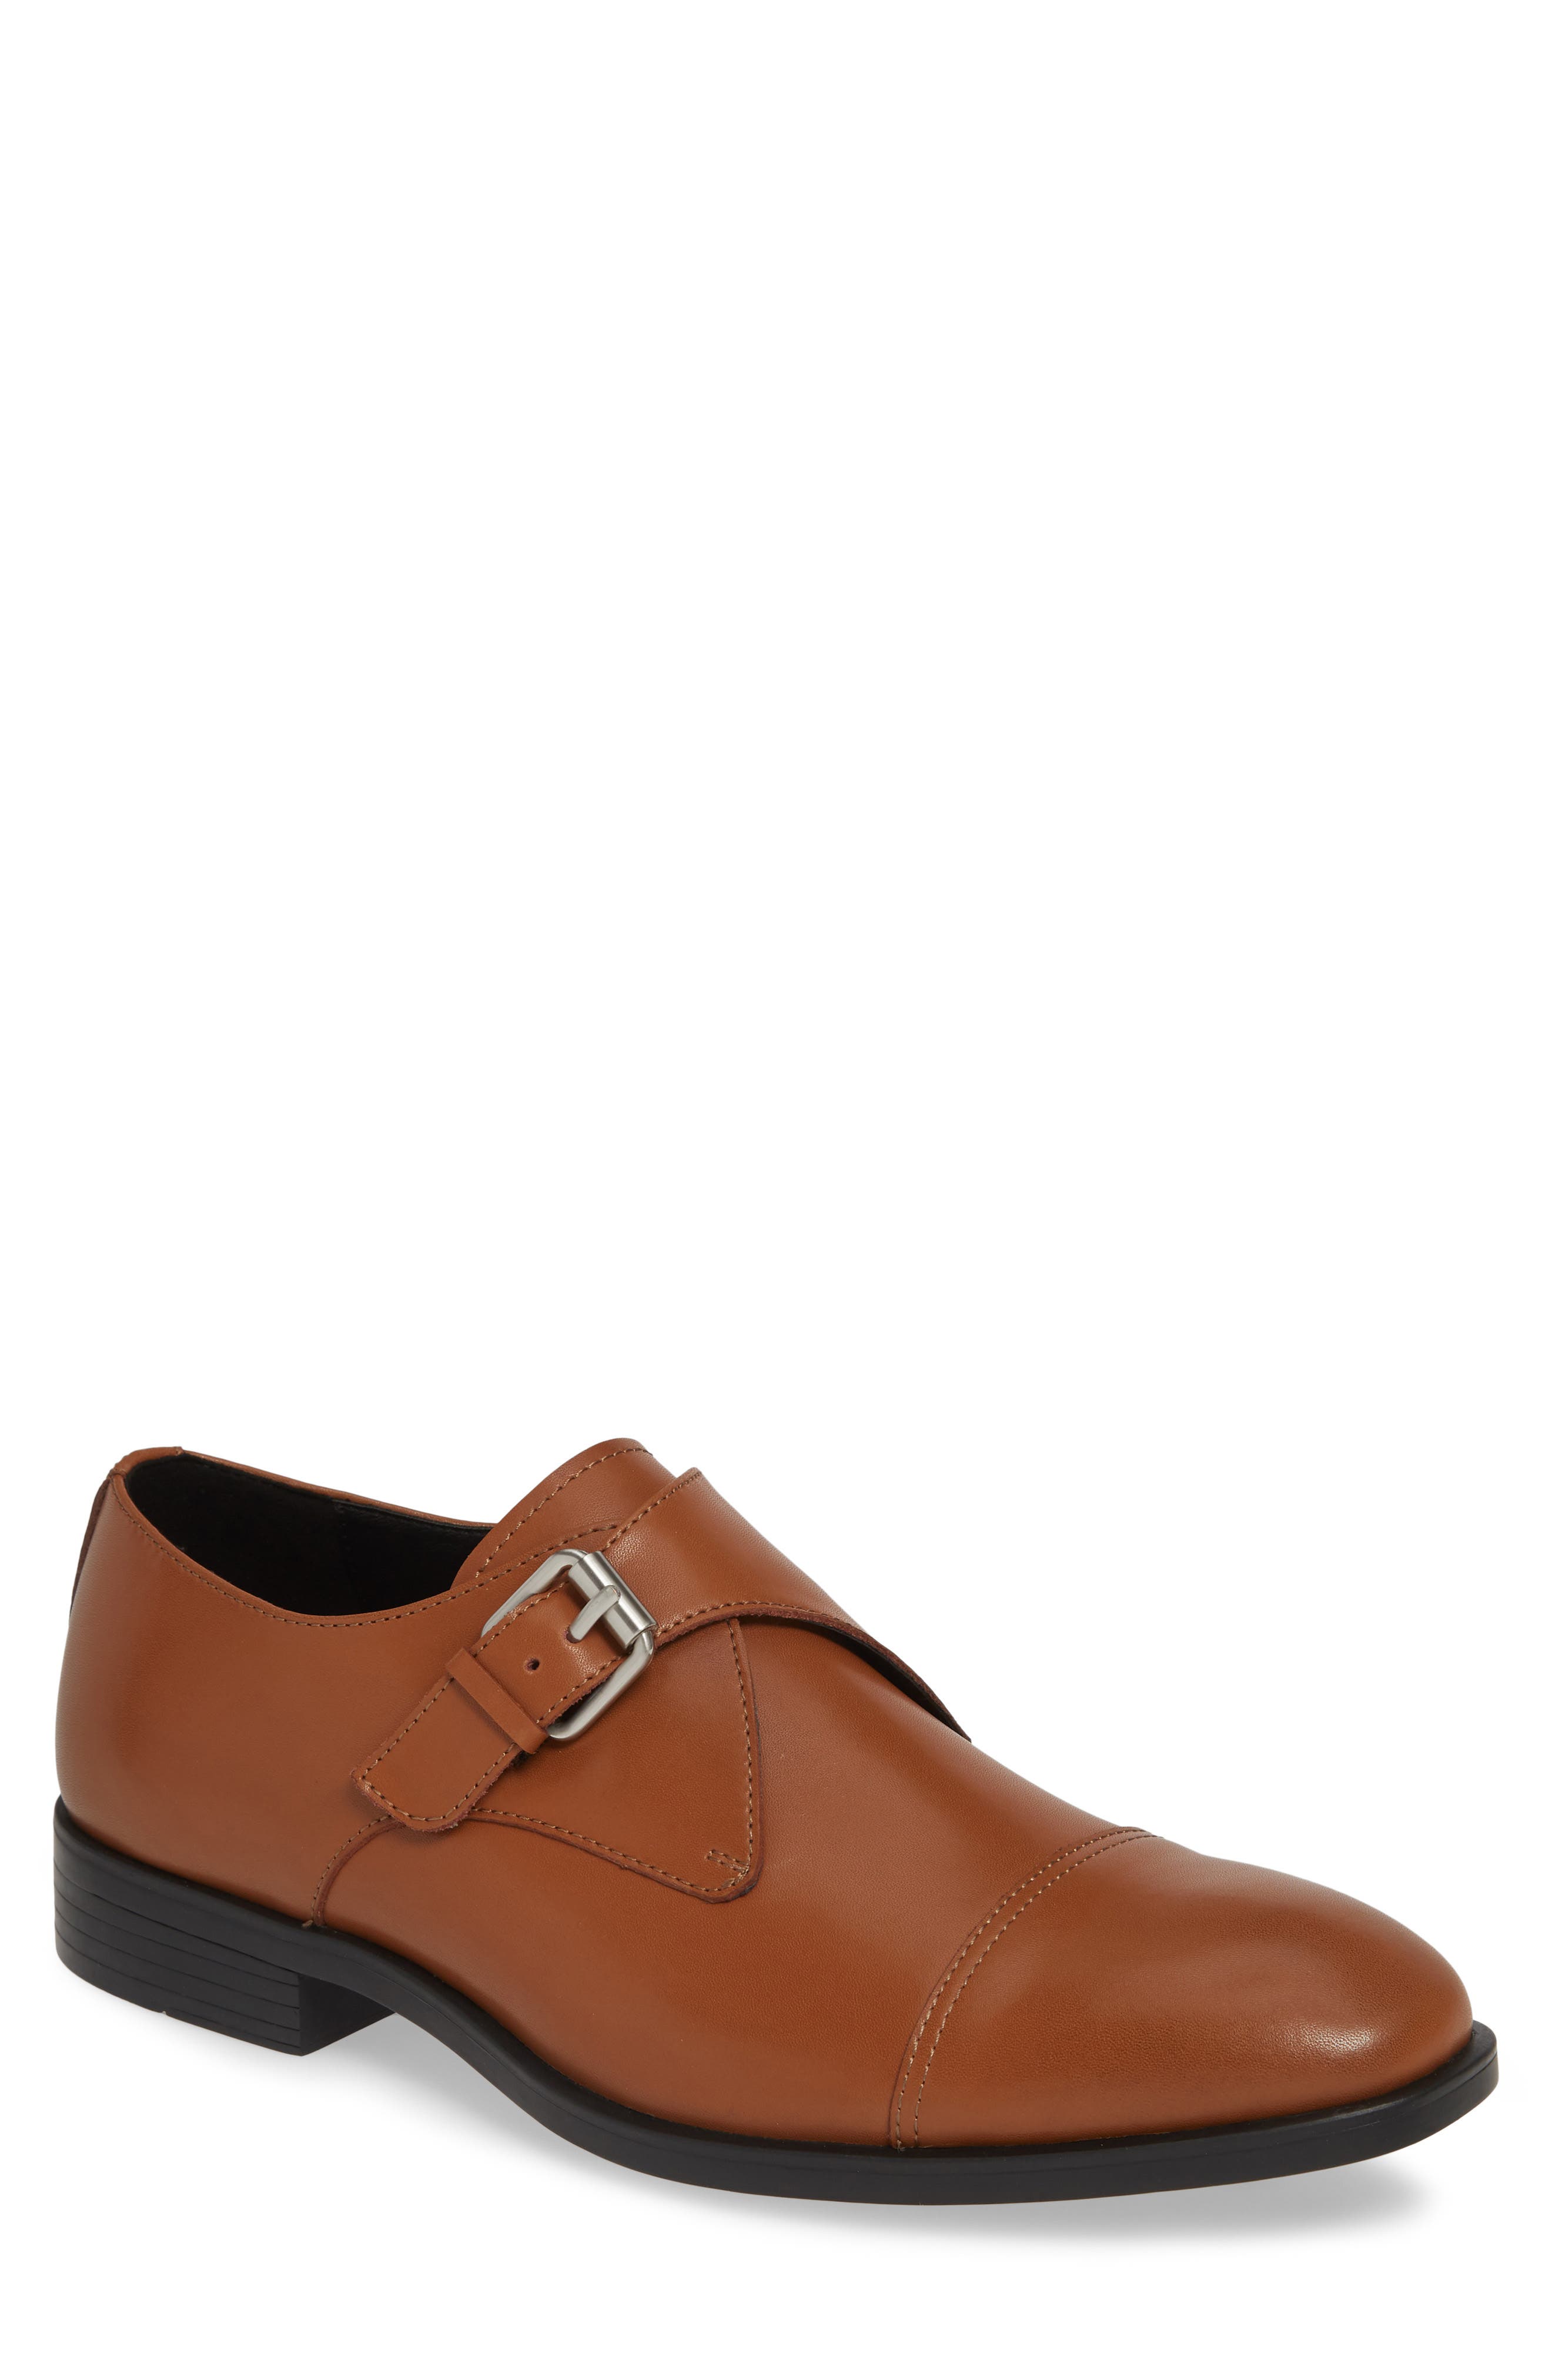 UPC 192675341158 product image for Men's Calvin Klein Channer Monk Strap Shoe, Size 7.5 M - Brown | upcitemdb.com